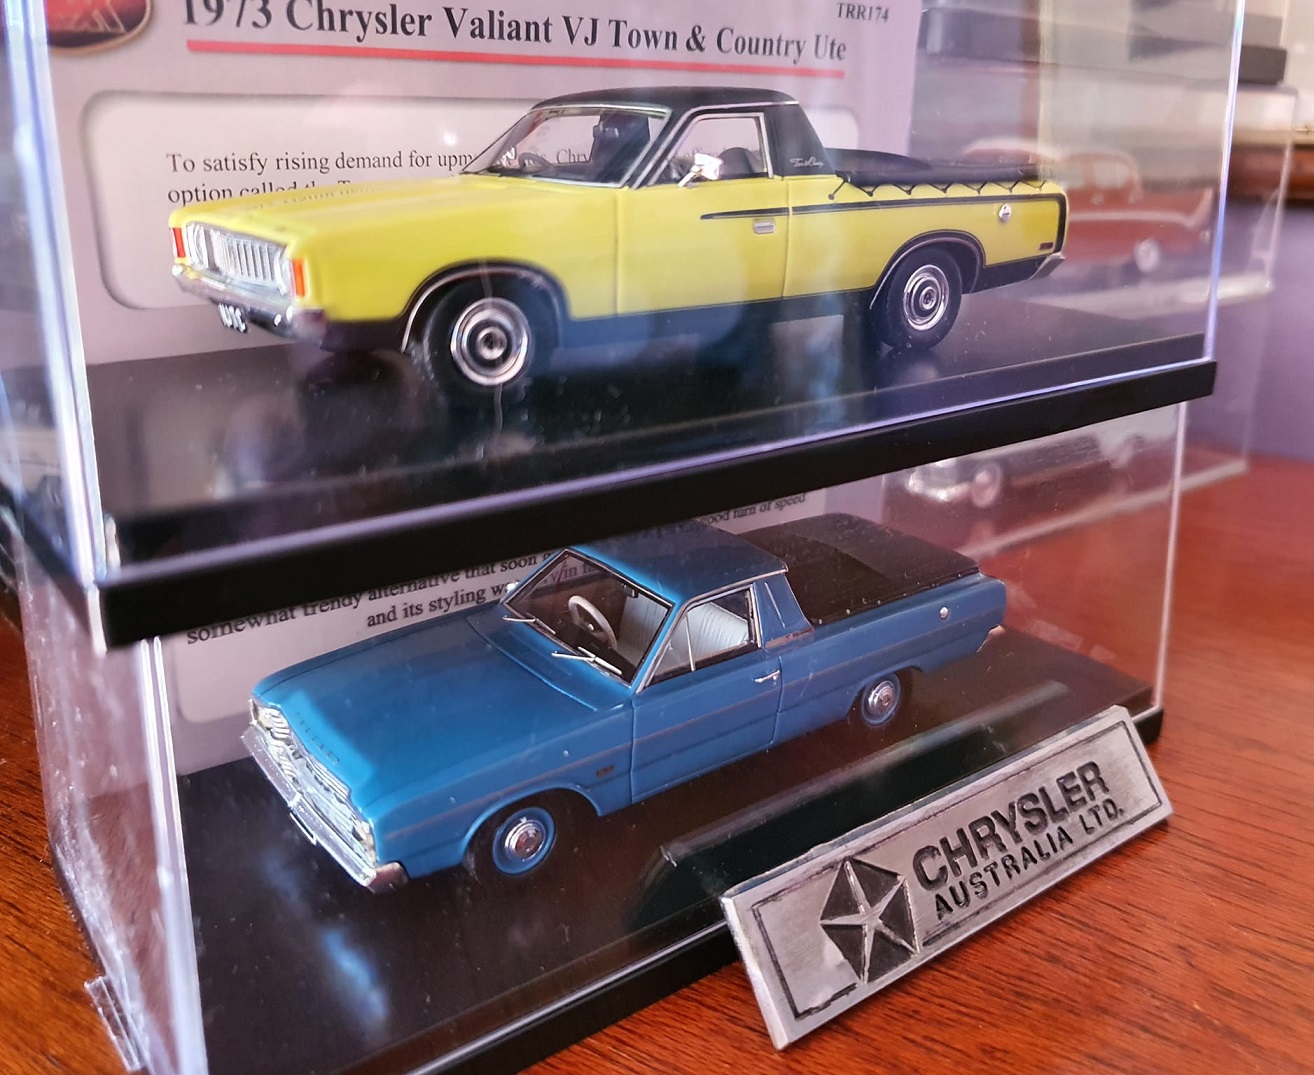 Chrysler collector cars WY.jpg